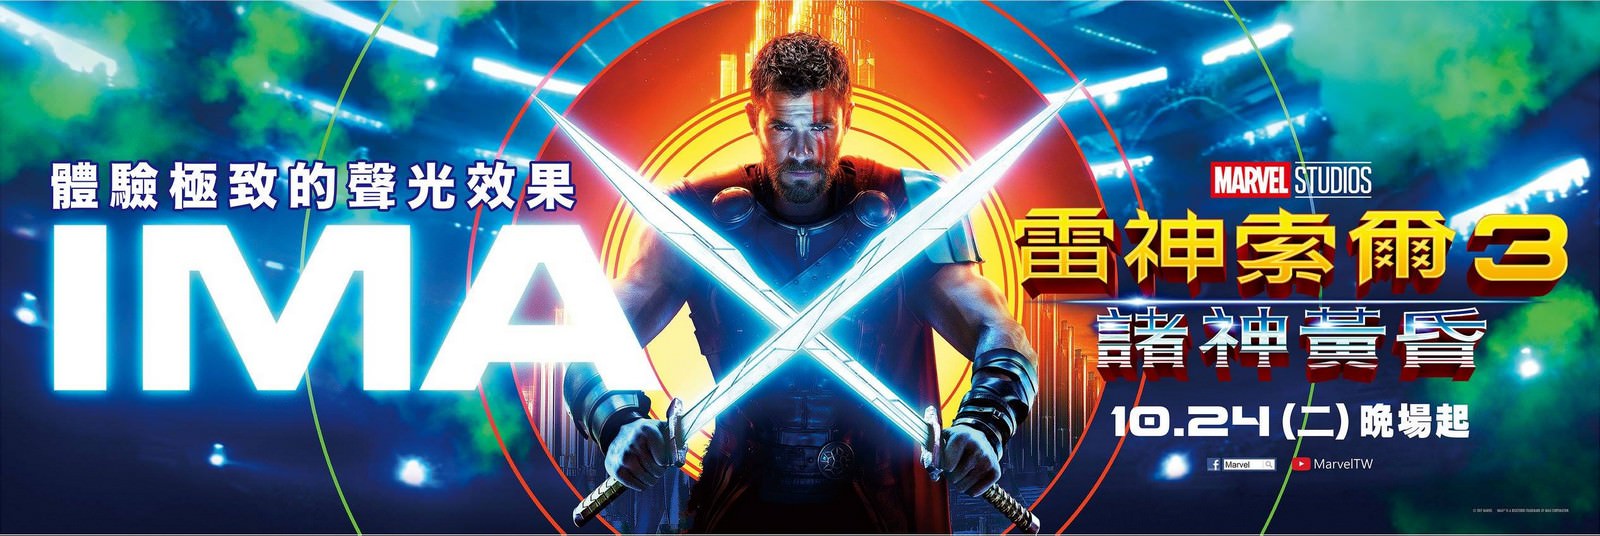 Movie, Thor: Ragnarok(美國, 2017年) / 雷神索爾3：諸神黃昏(台灣) / 雷神3：诸神黄昏(中國) / 雷神奇俠3：諸神黃昏(香港), 電影海報, 台灣, 橫版